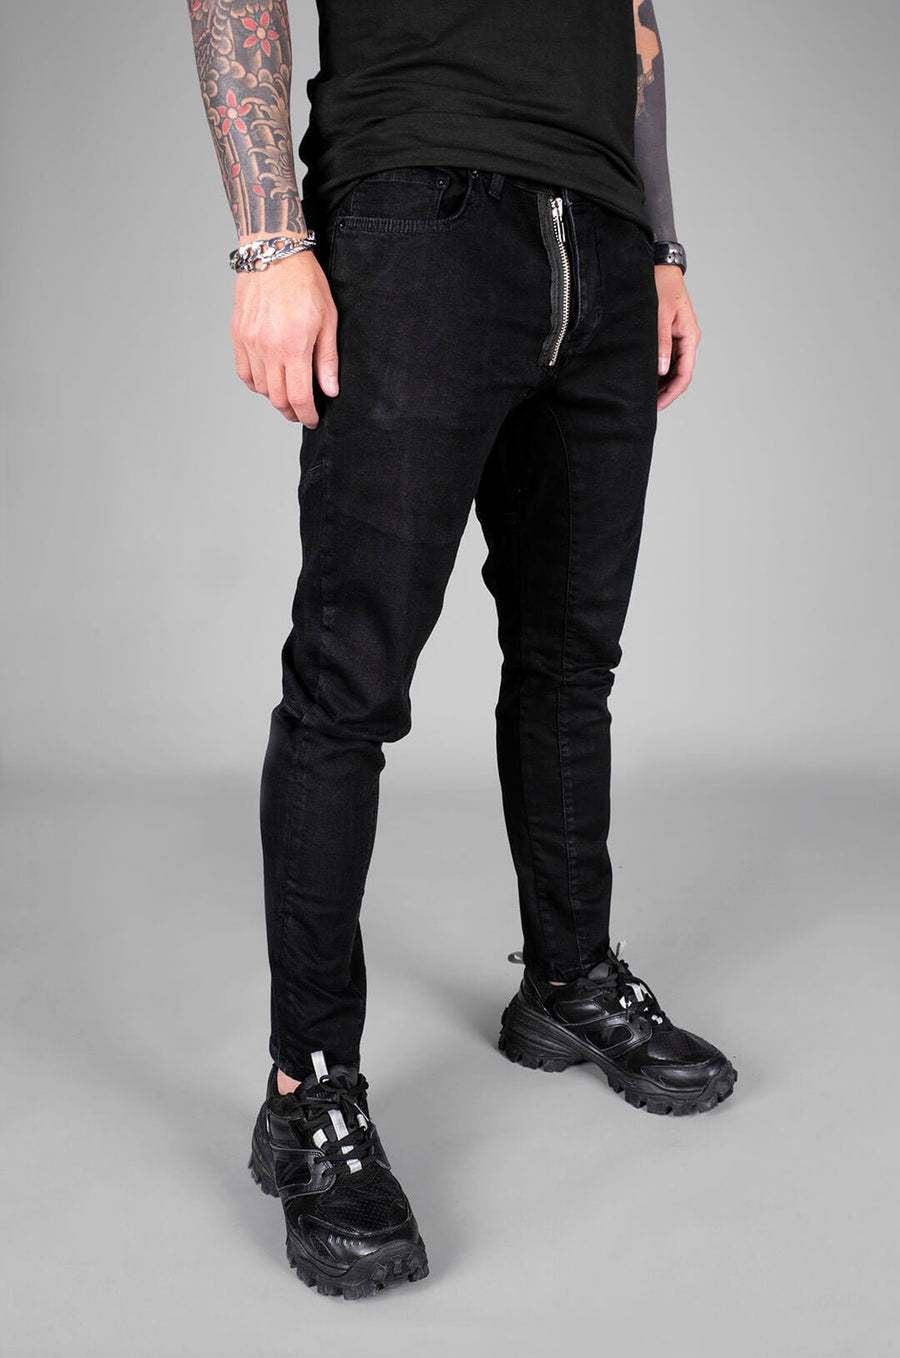 Sneakerjeans Black Zippered Skinny Jeans 5506 - Sneakerjeans